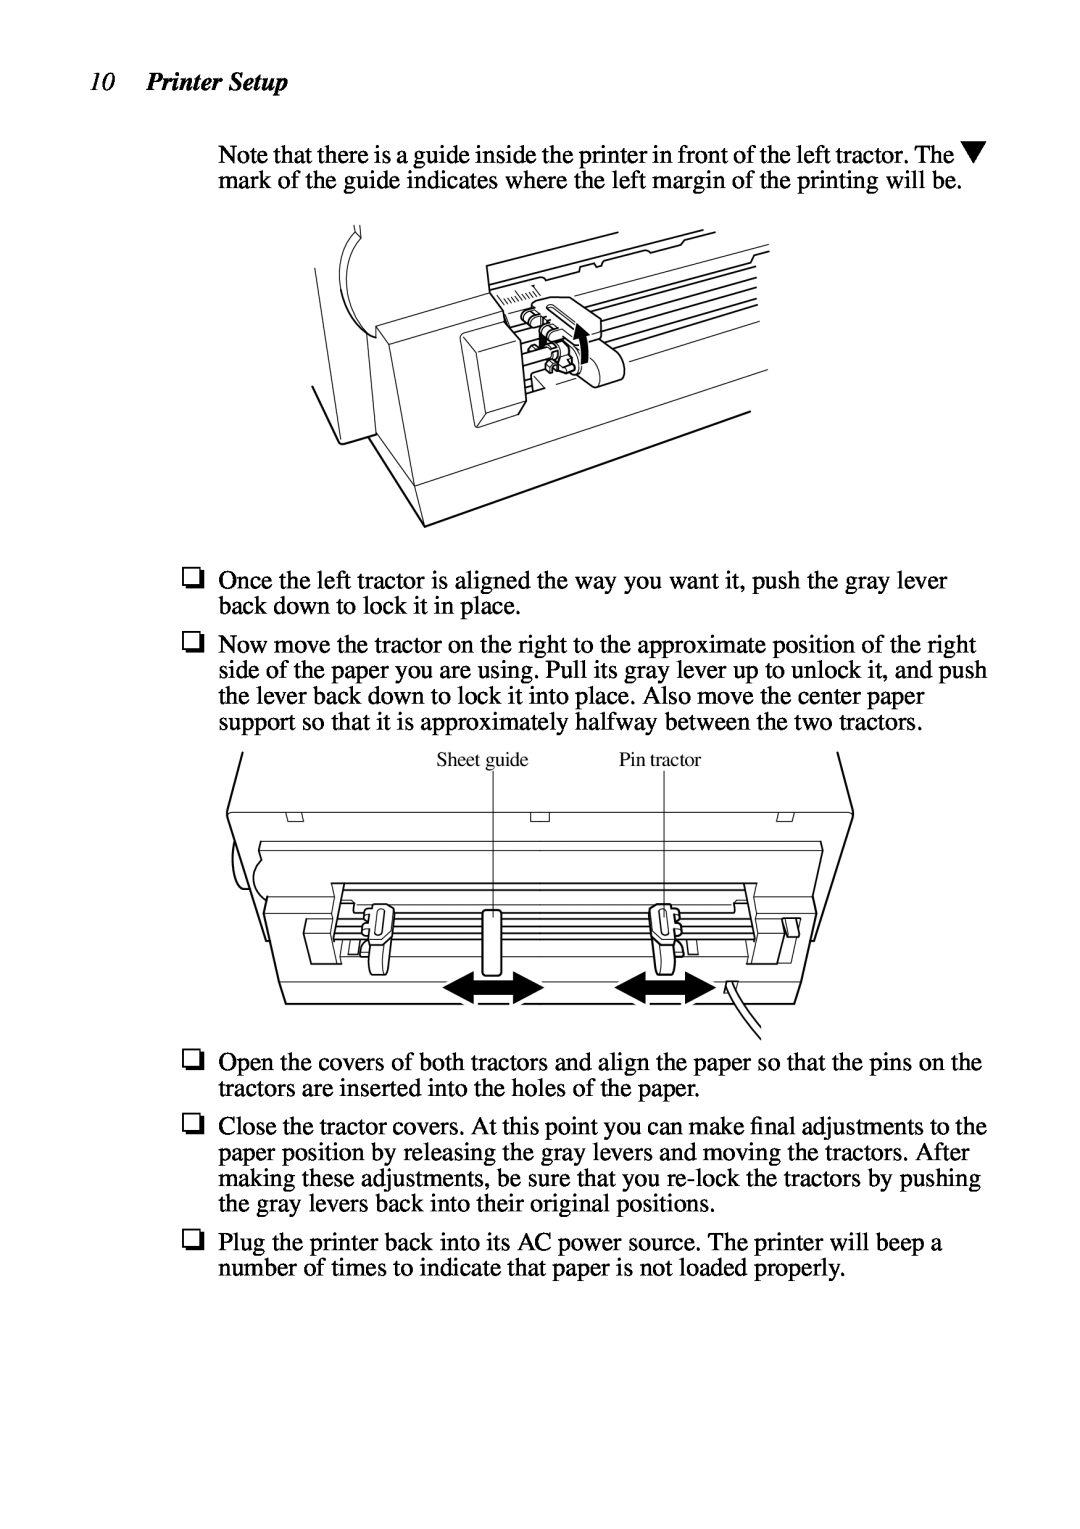 Star Micronics LC-6211 user manual Printer Setup, Sheet guide 